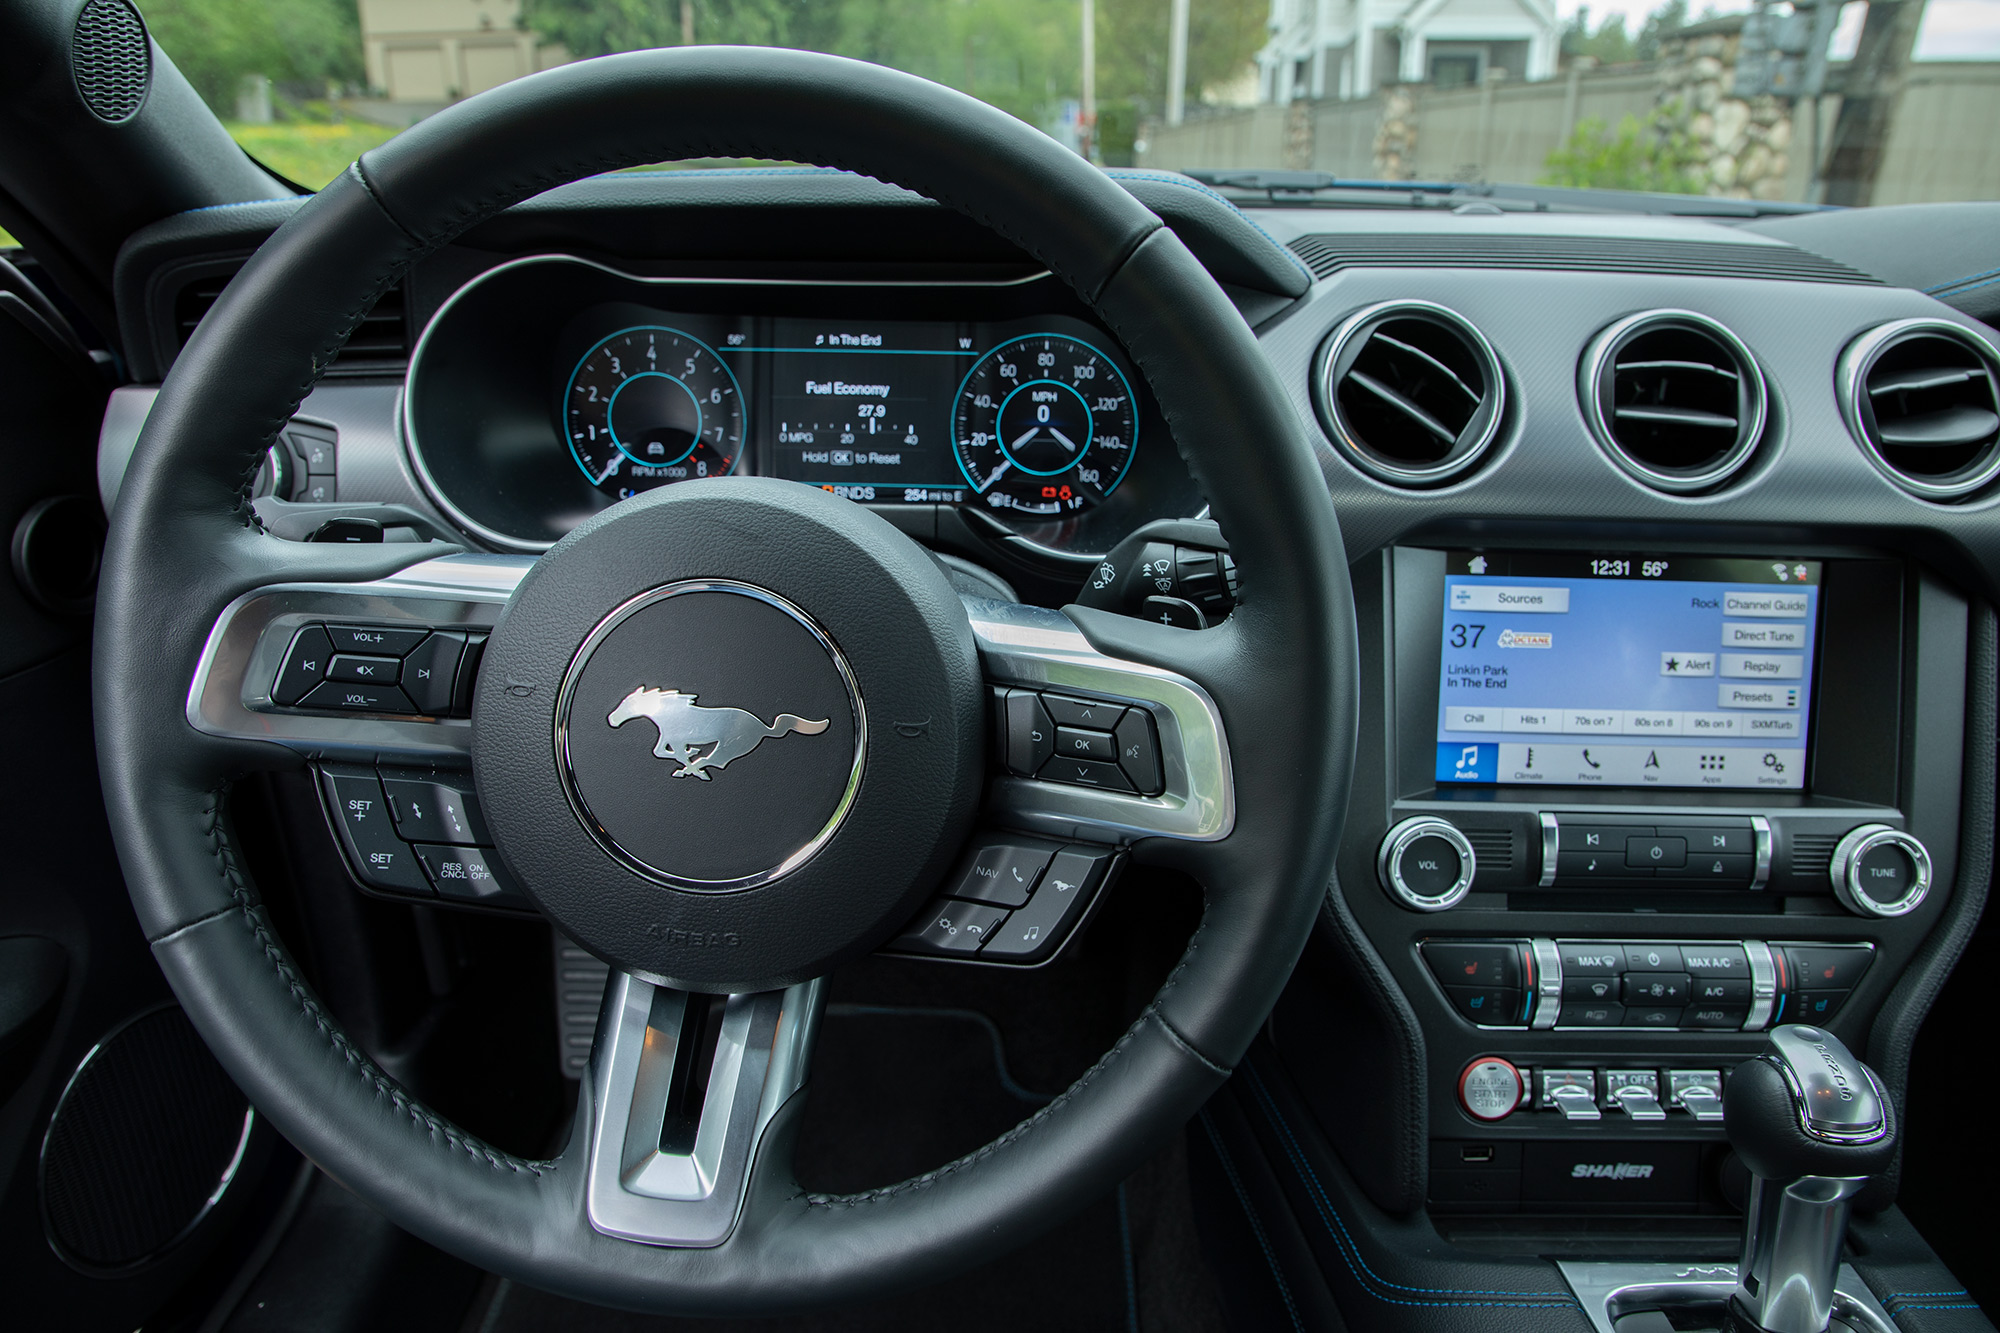 2018 Ford Mustang Gt Interior